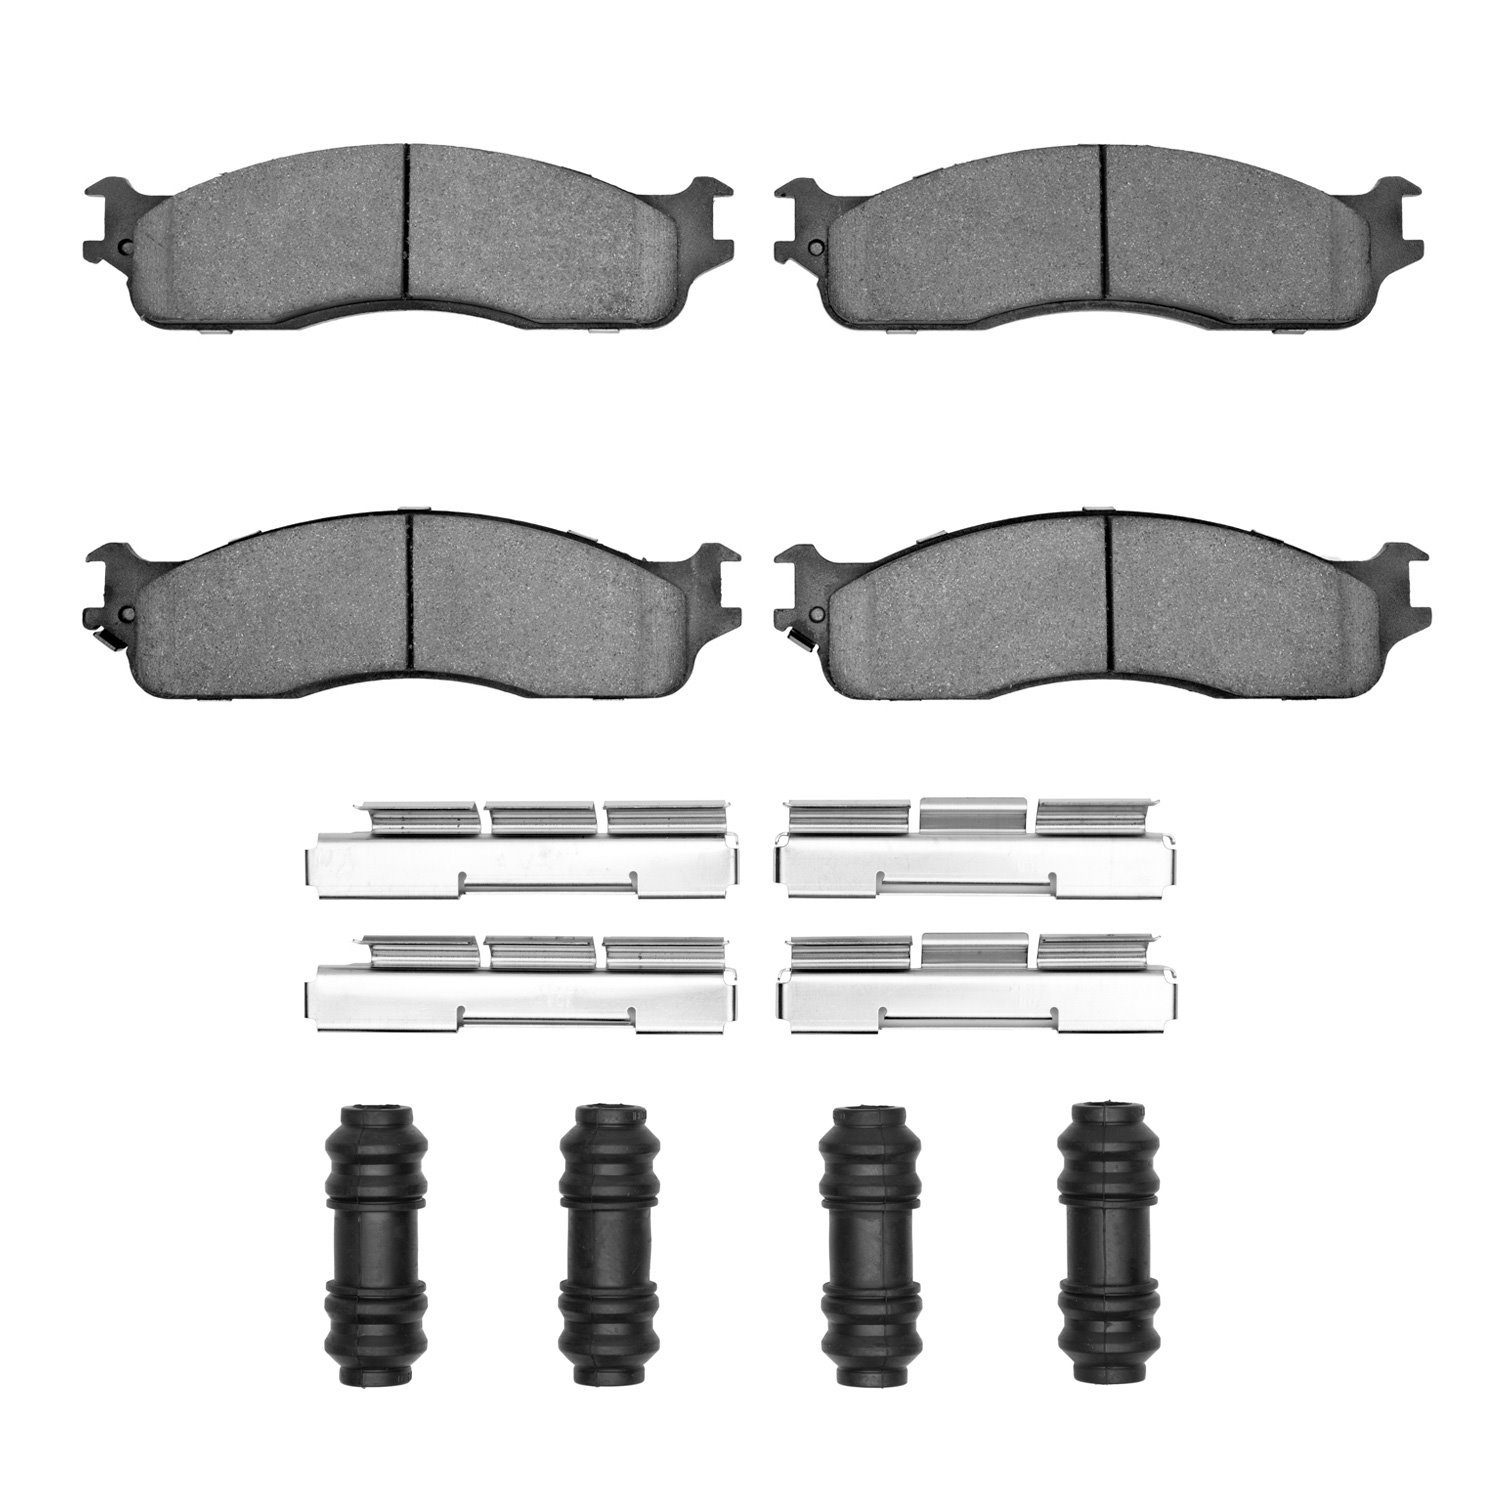 1310-0965-01 3000-Series Ceramic Brake Pads & Hardware Kit, 2003-2008 Mopar, Position: Front